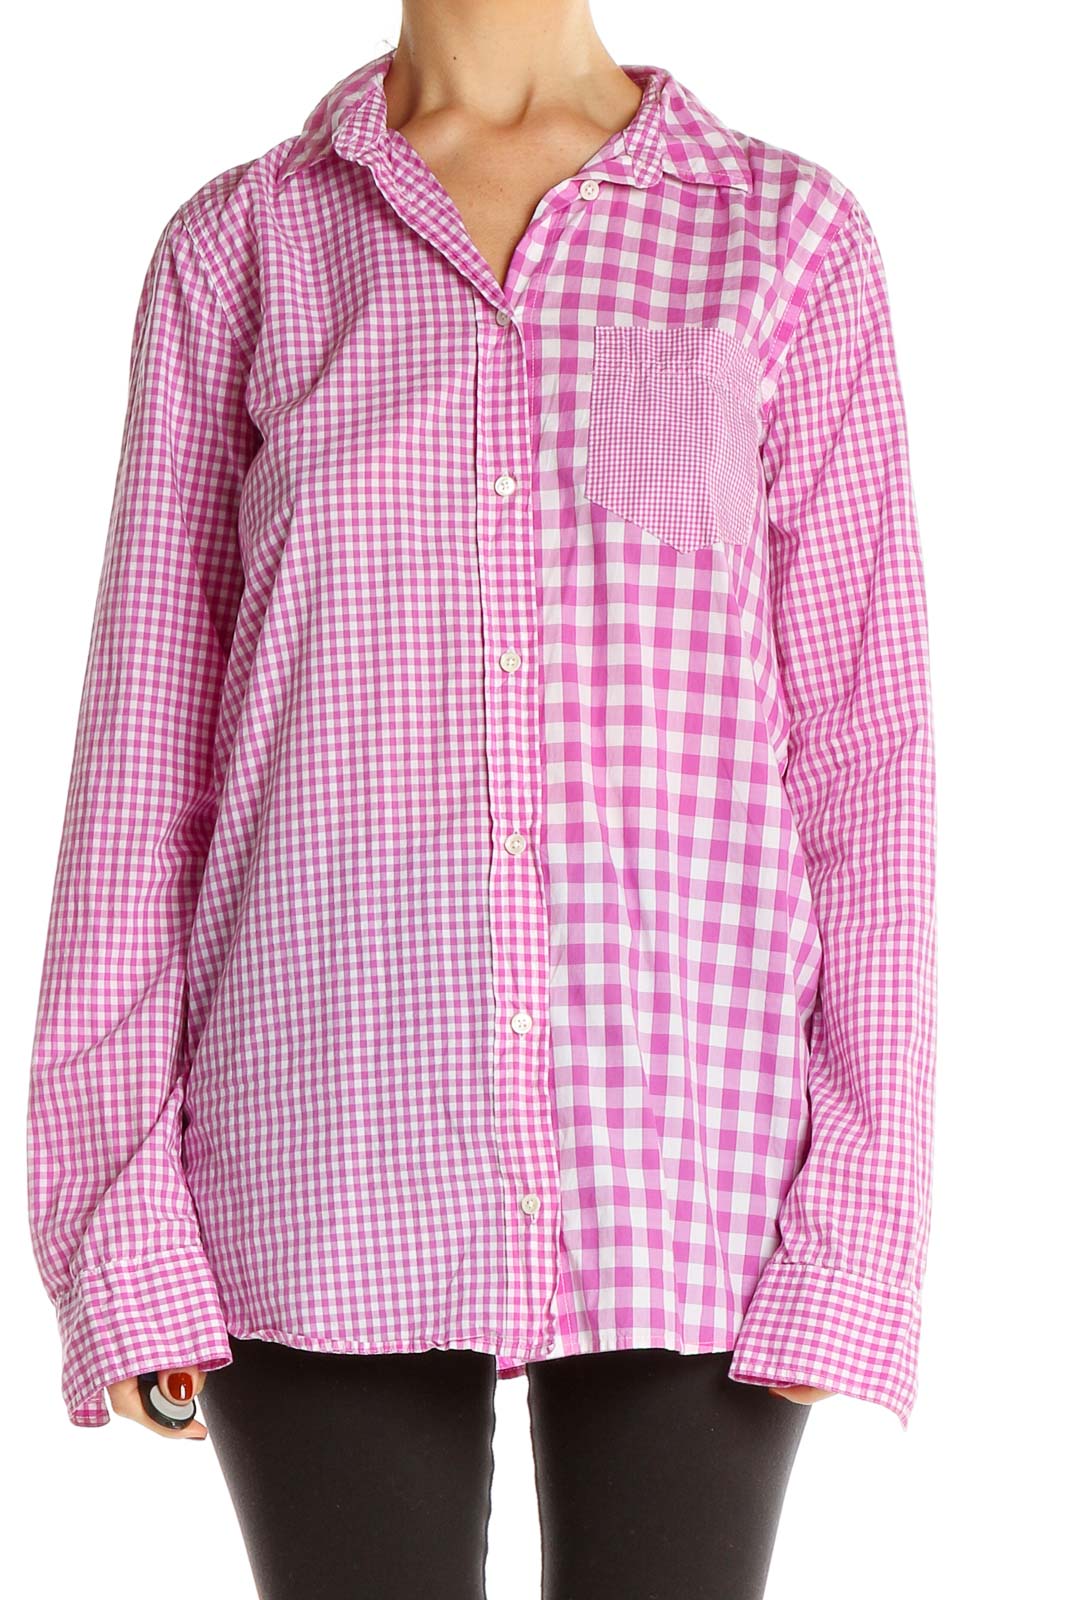 Pink Checkered Work Shirt Front